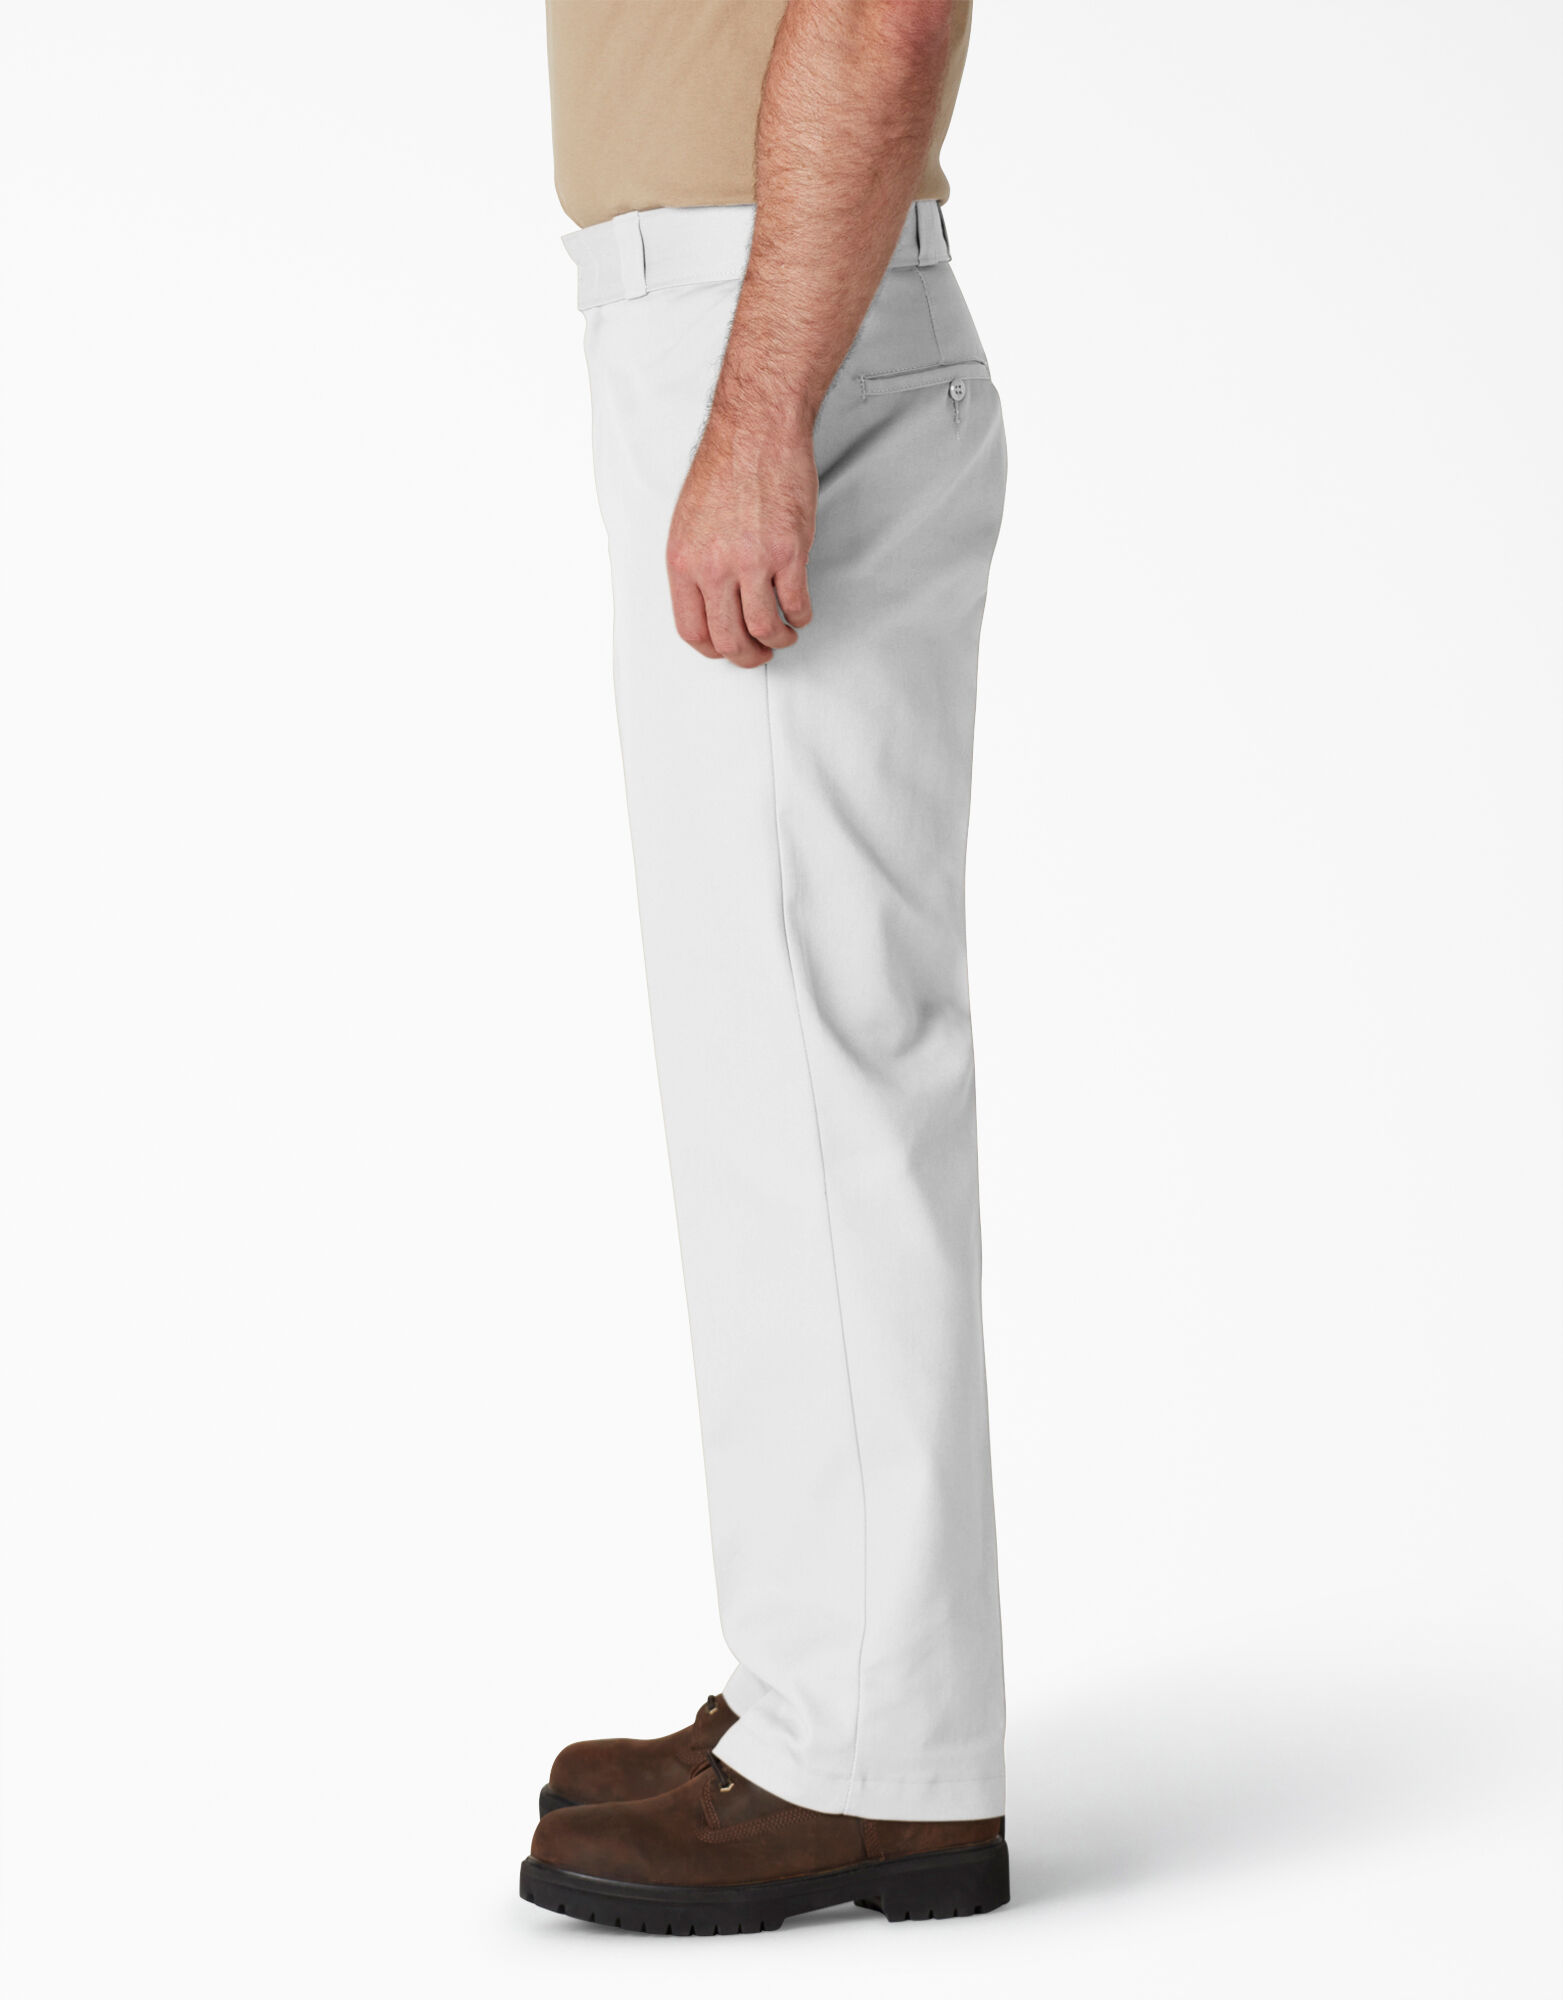 Dickies Mens Original Fit 874 Work Pant White Classic Work Uniform All Sizes 